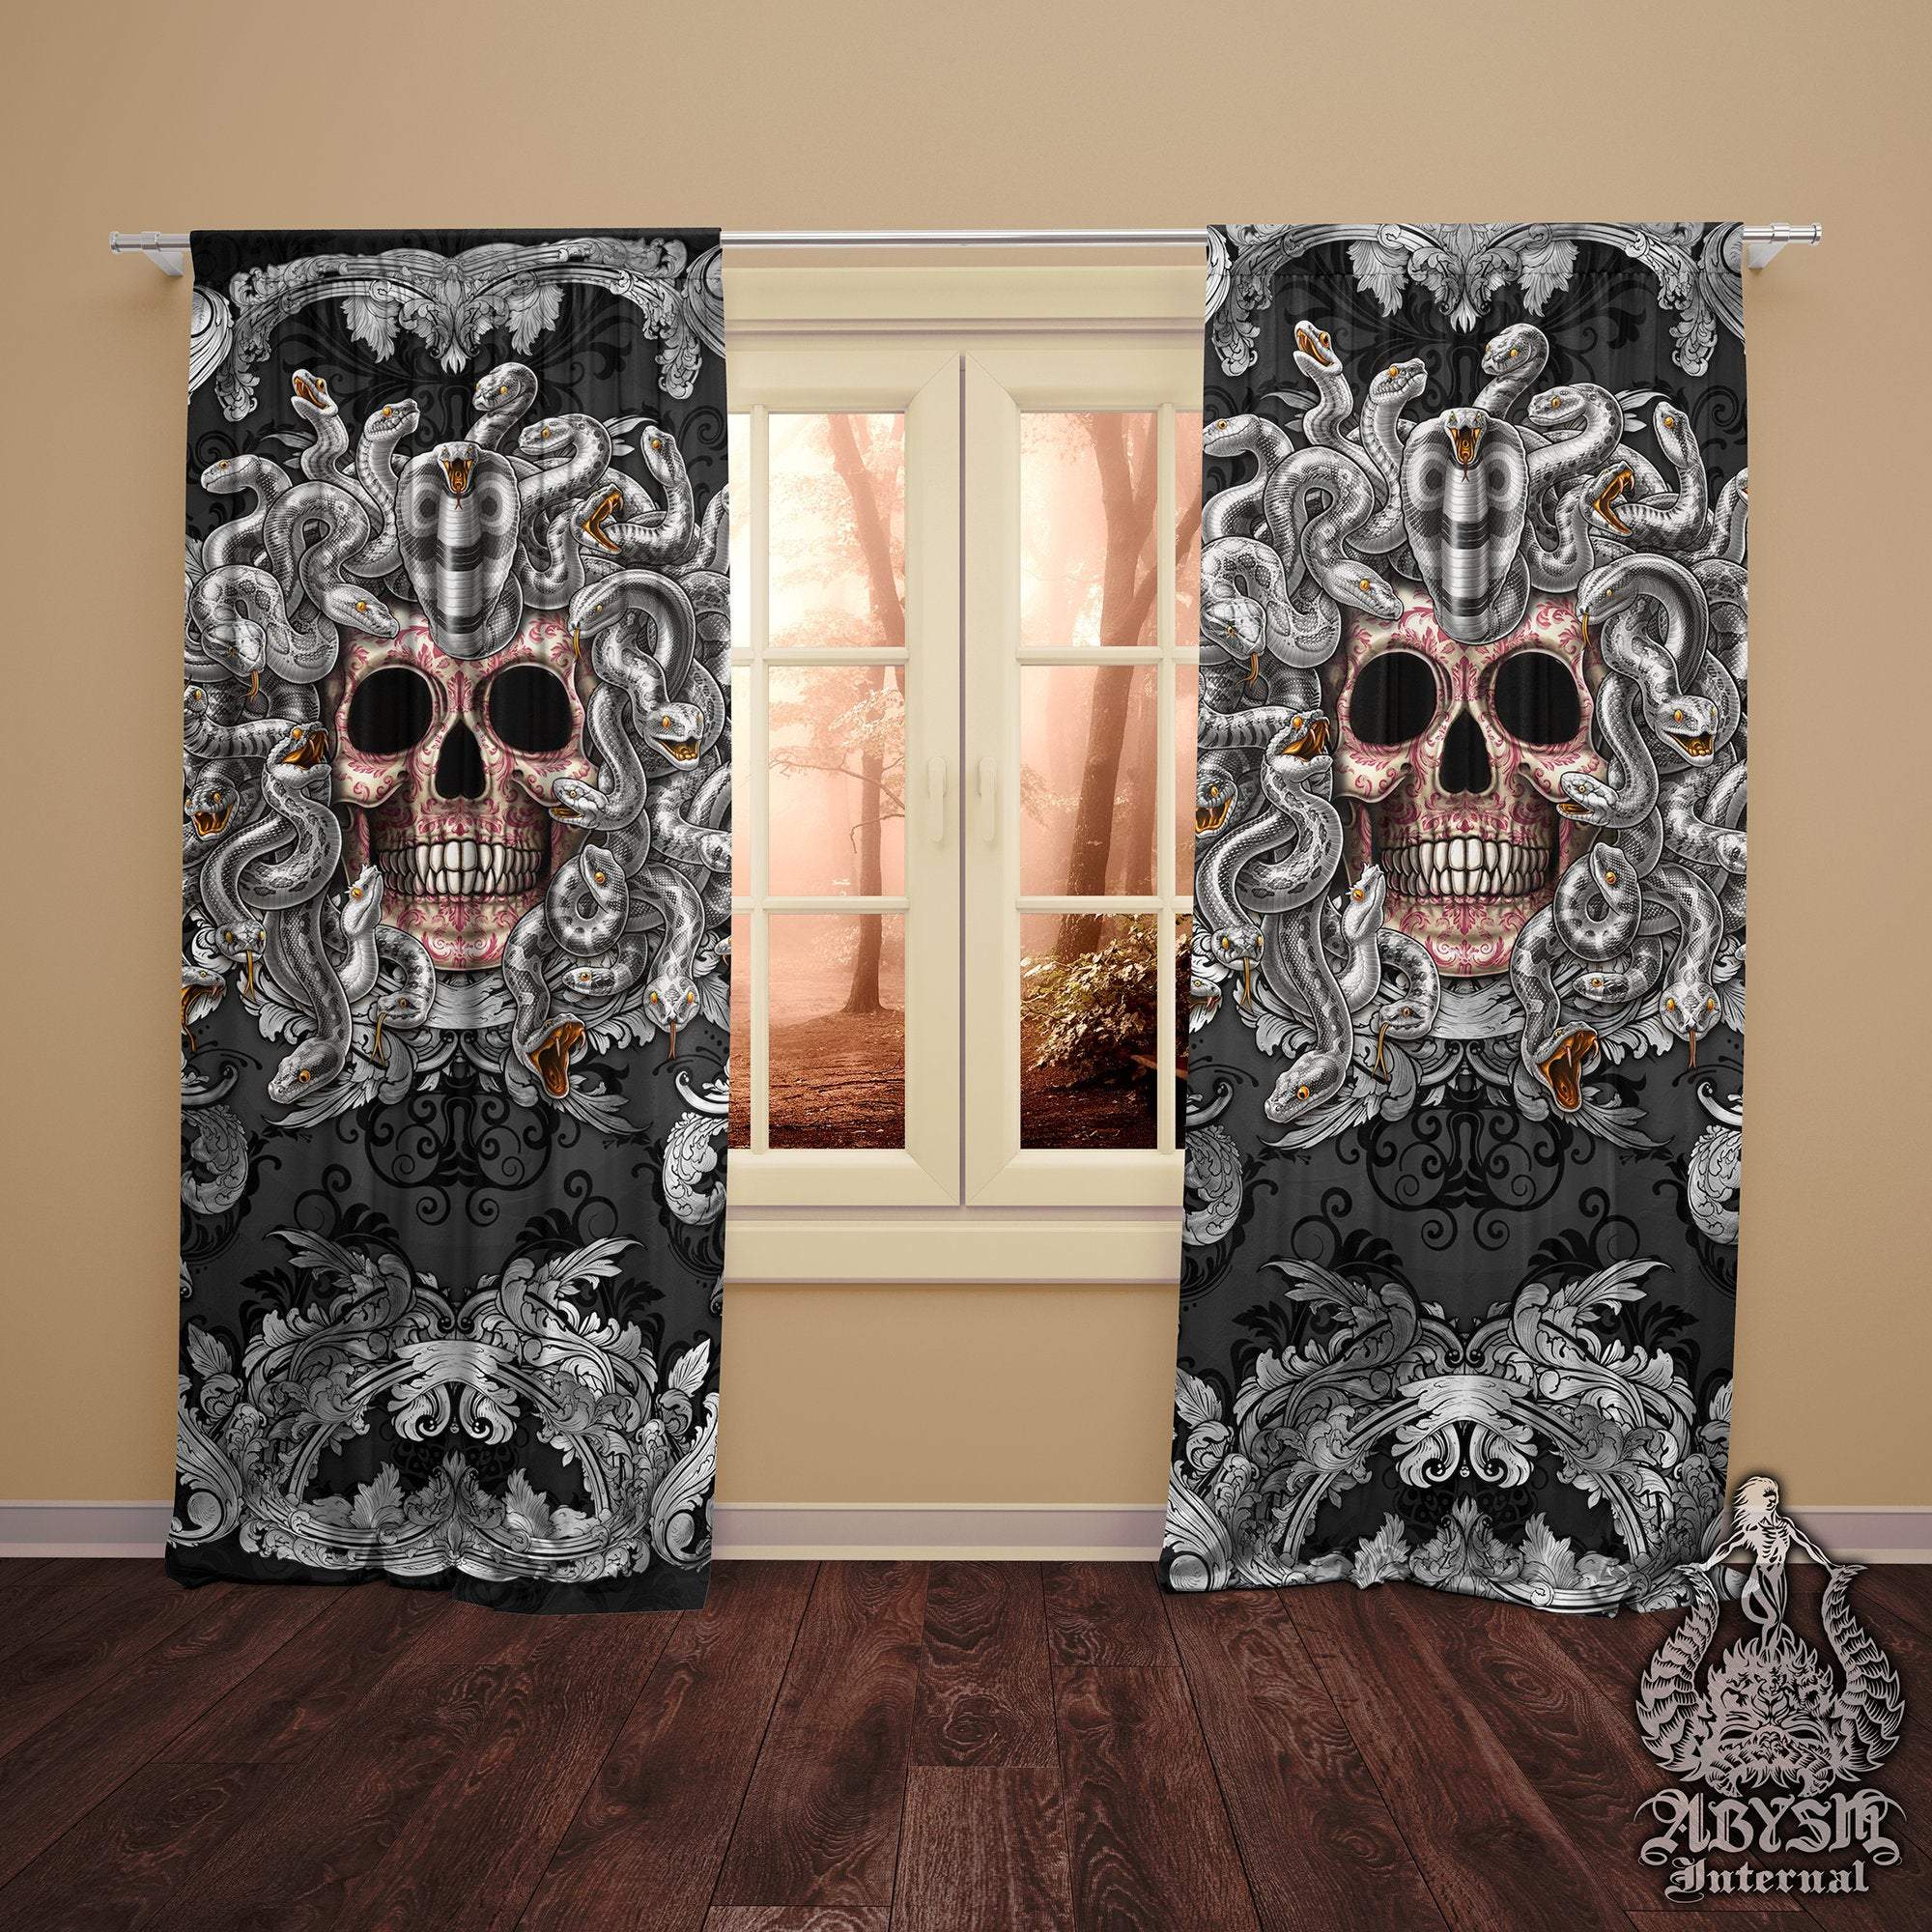 Medusa Blackout Curtains, Long Window Panels, Skull Art Print, Macabre Decor - Silver Snakes - Abysm Internal